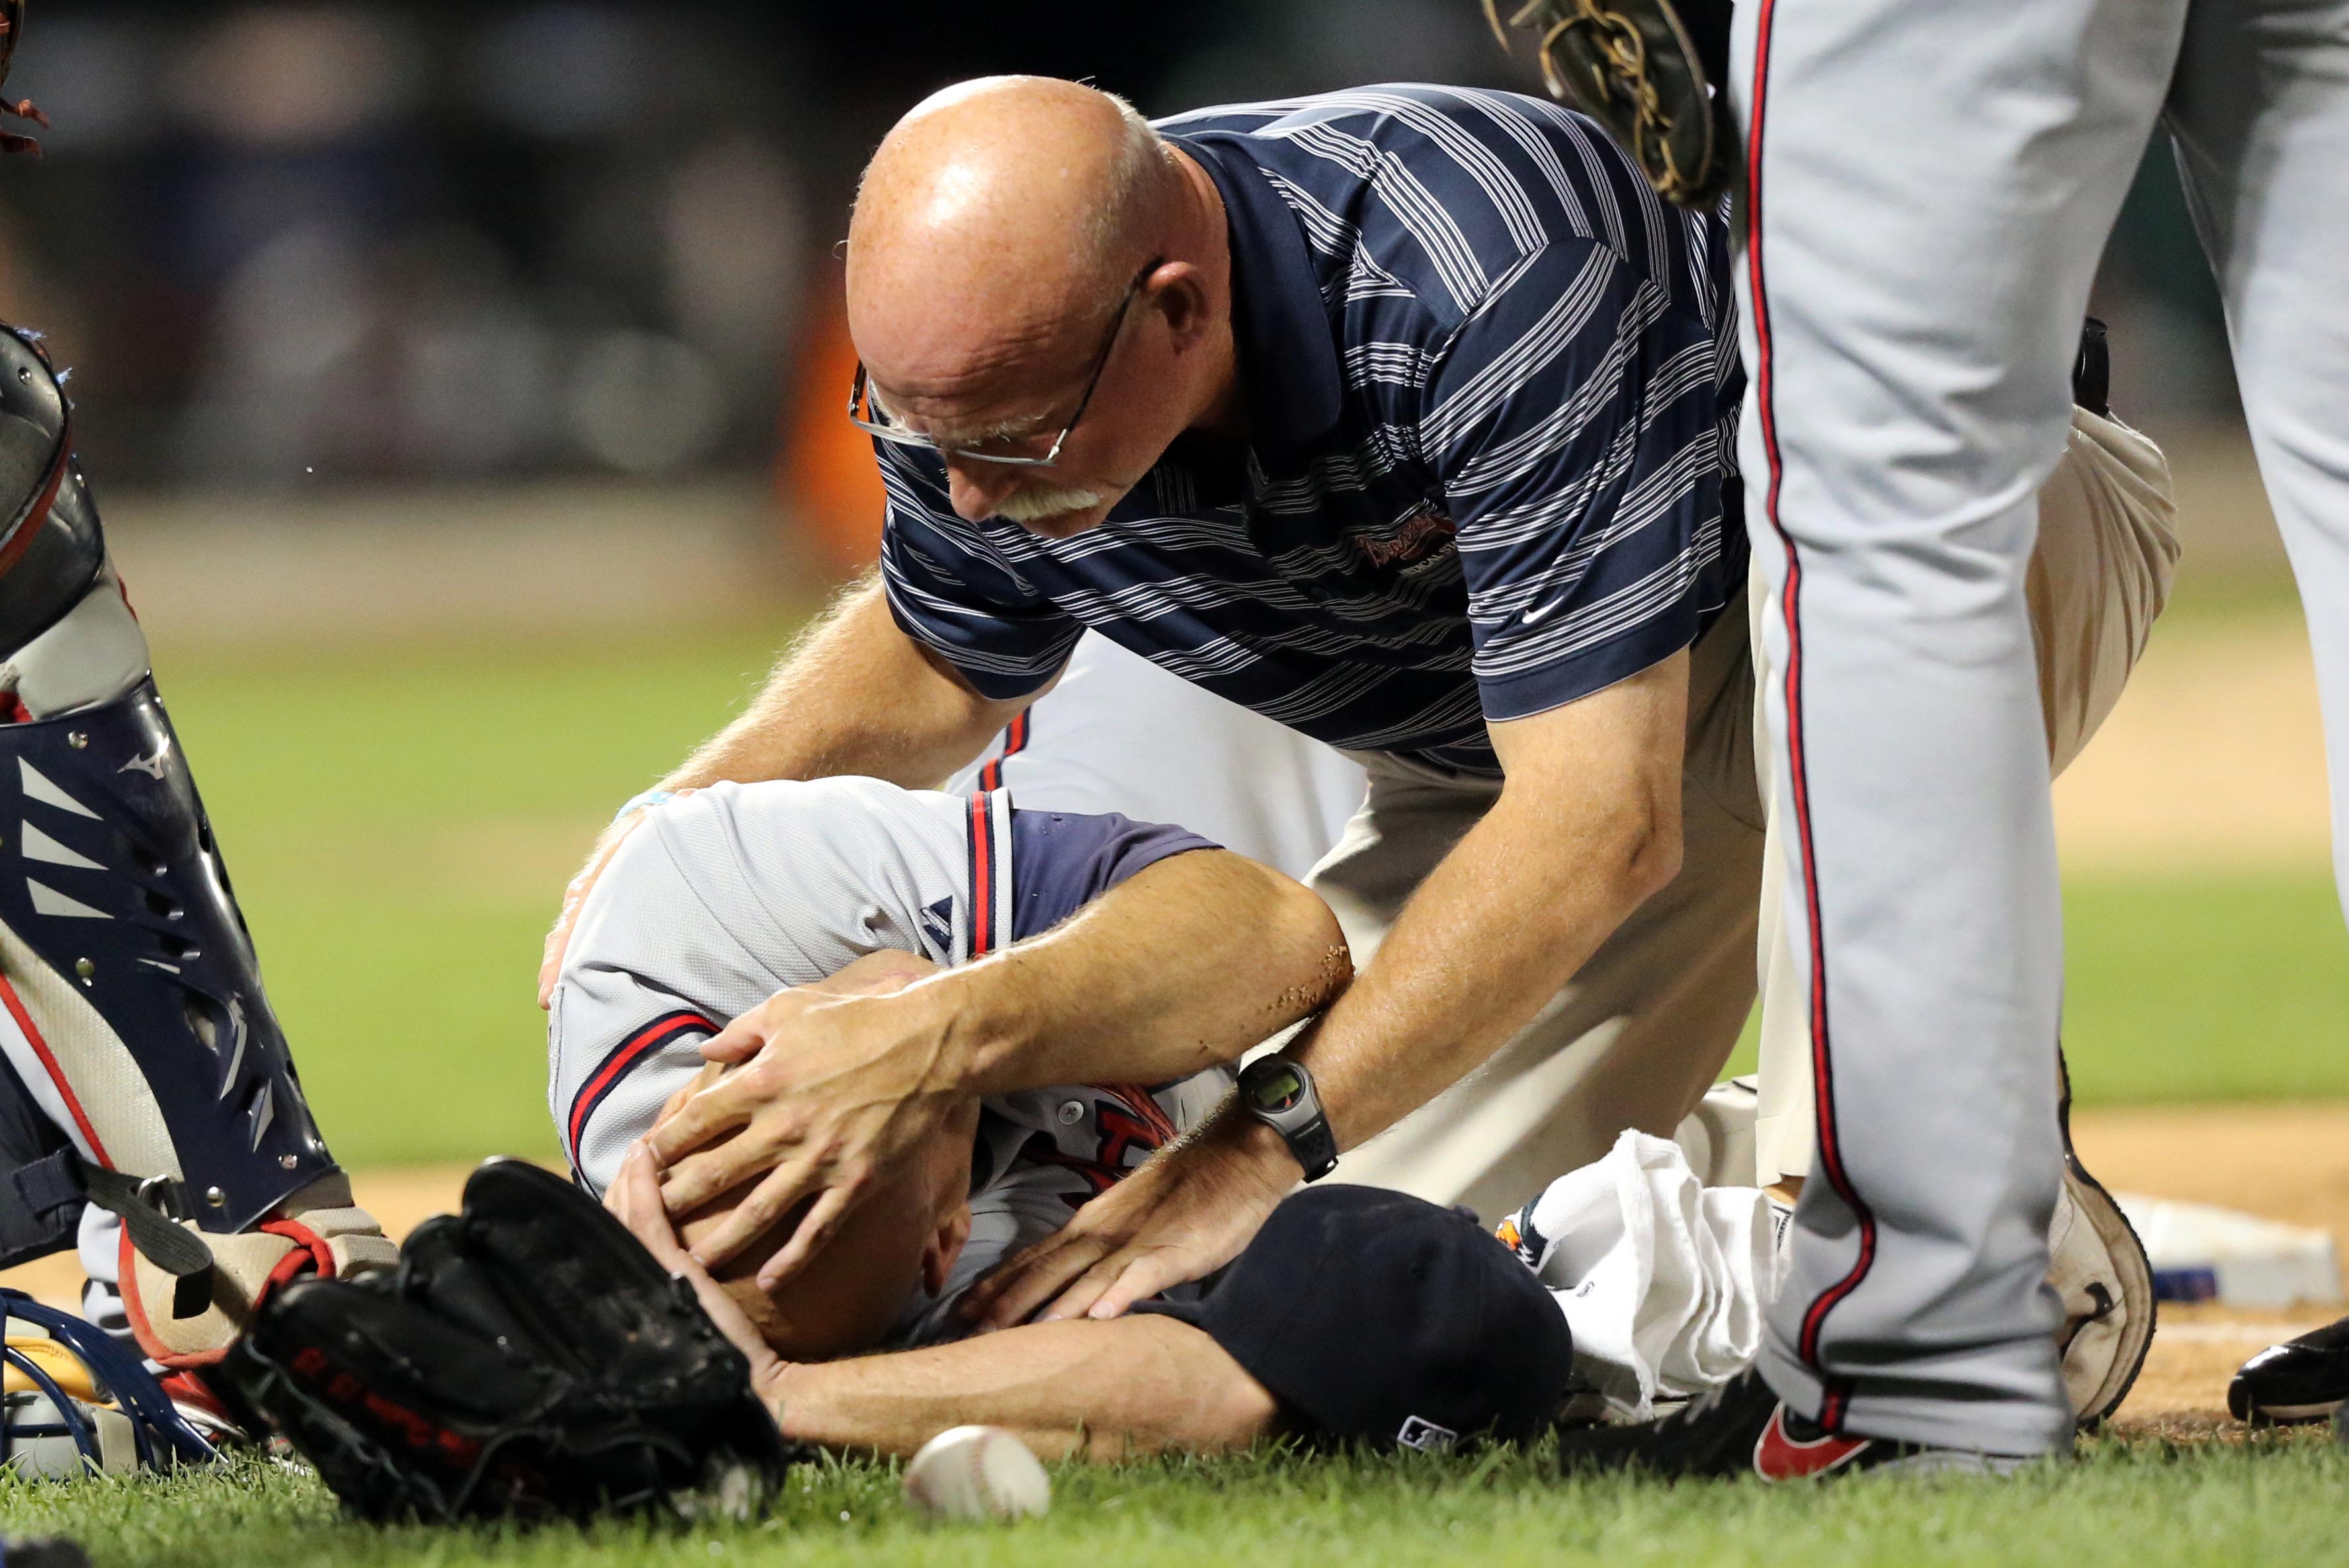 Photos: Atlanta Braves pitcher Tim Hudson ankle injury July 24